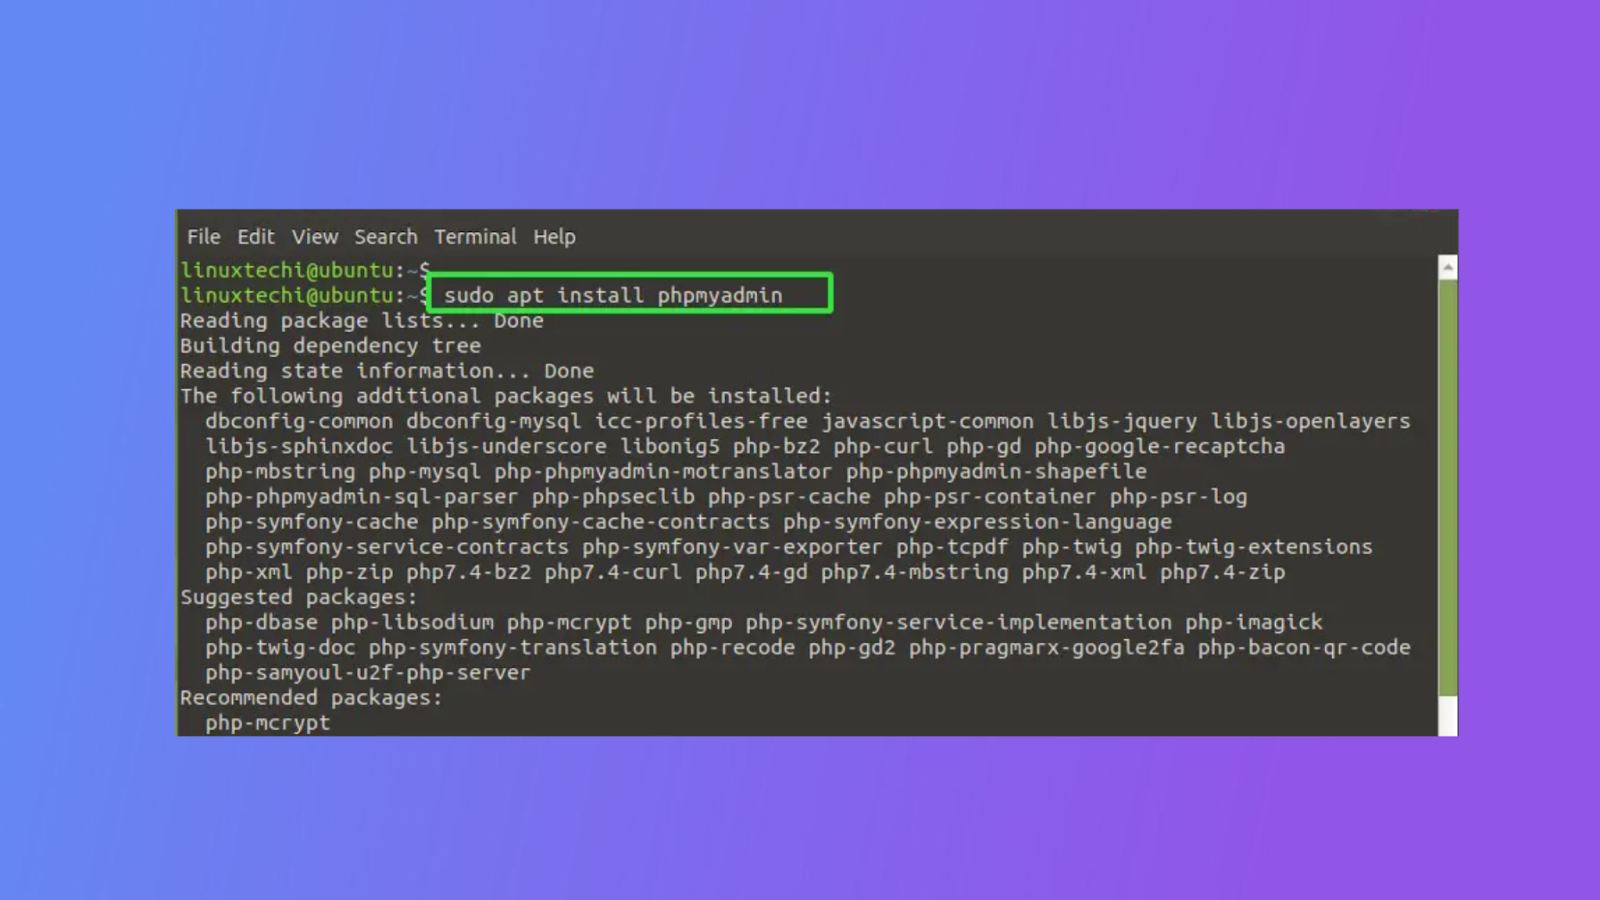 Code to install phpmyadmin